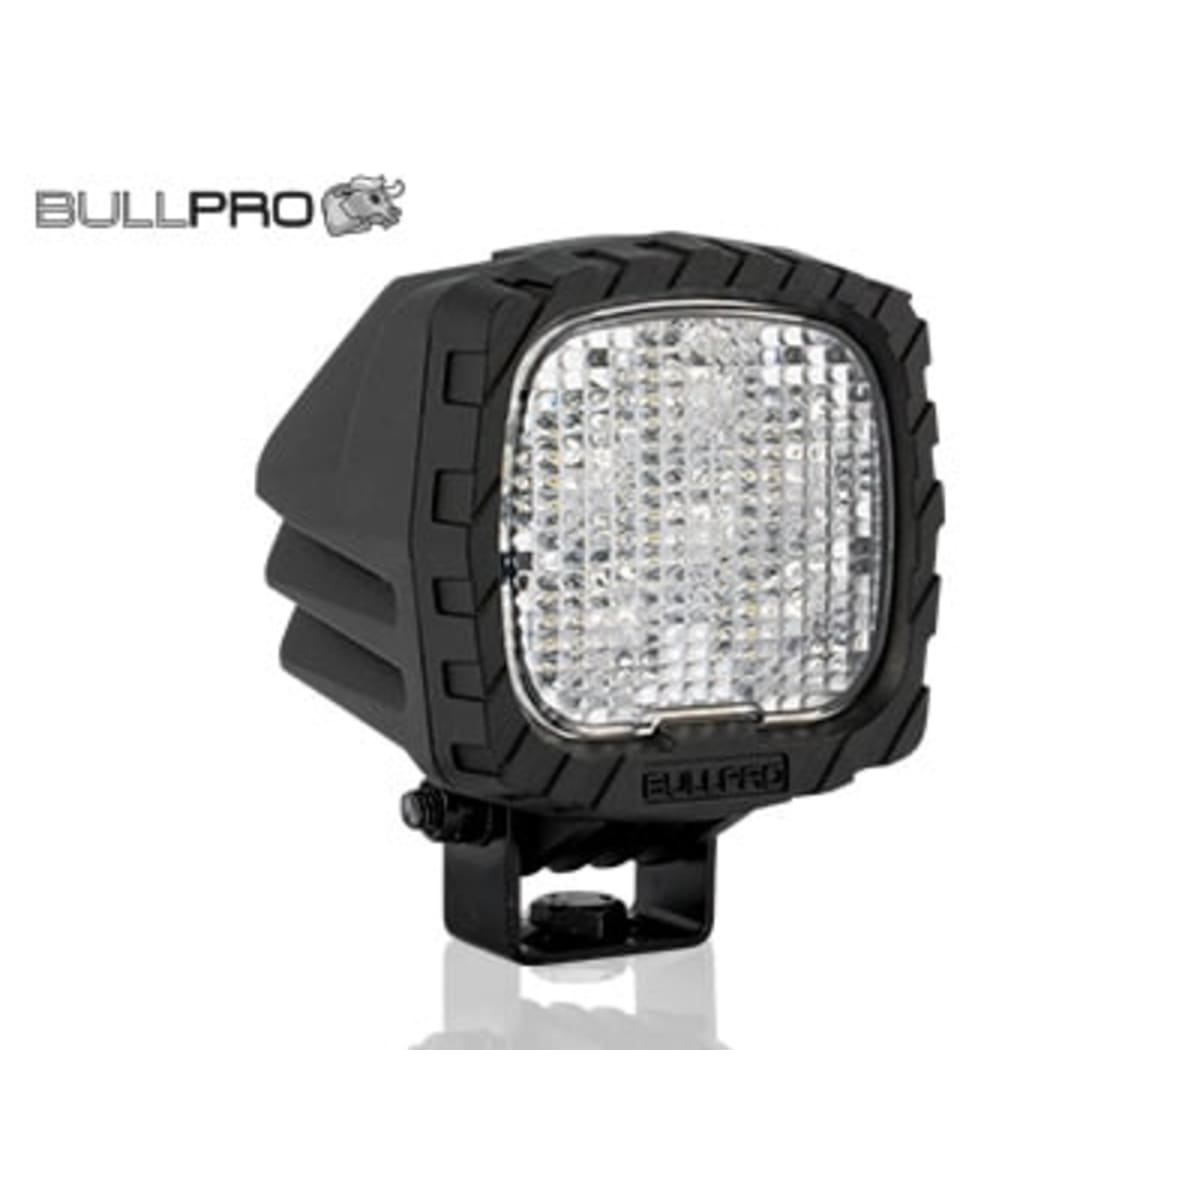 Bullpro 9-60V 60W Flood LED työvalo  verkkokauppa